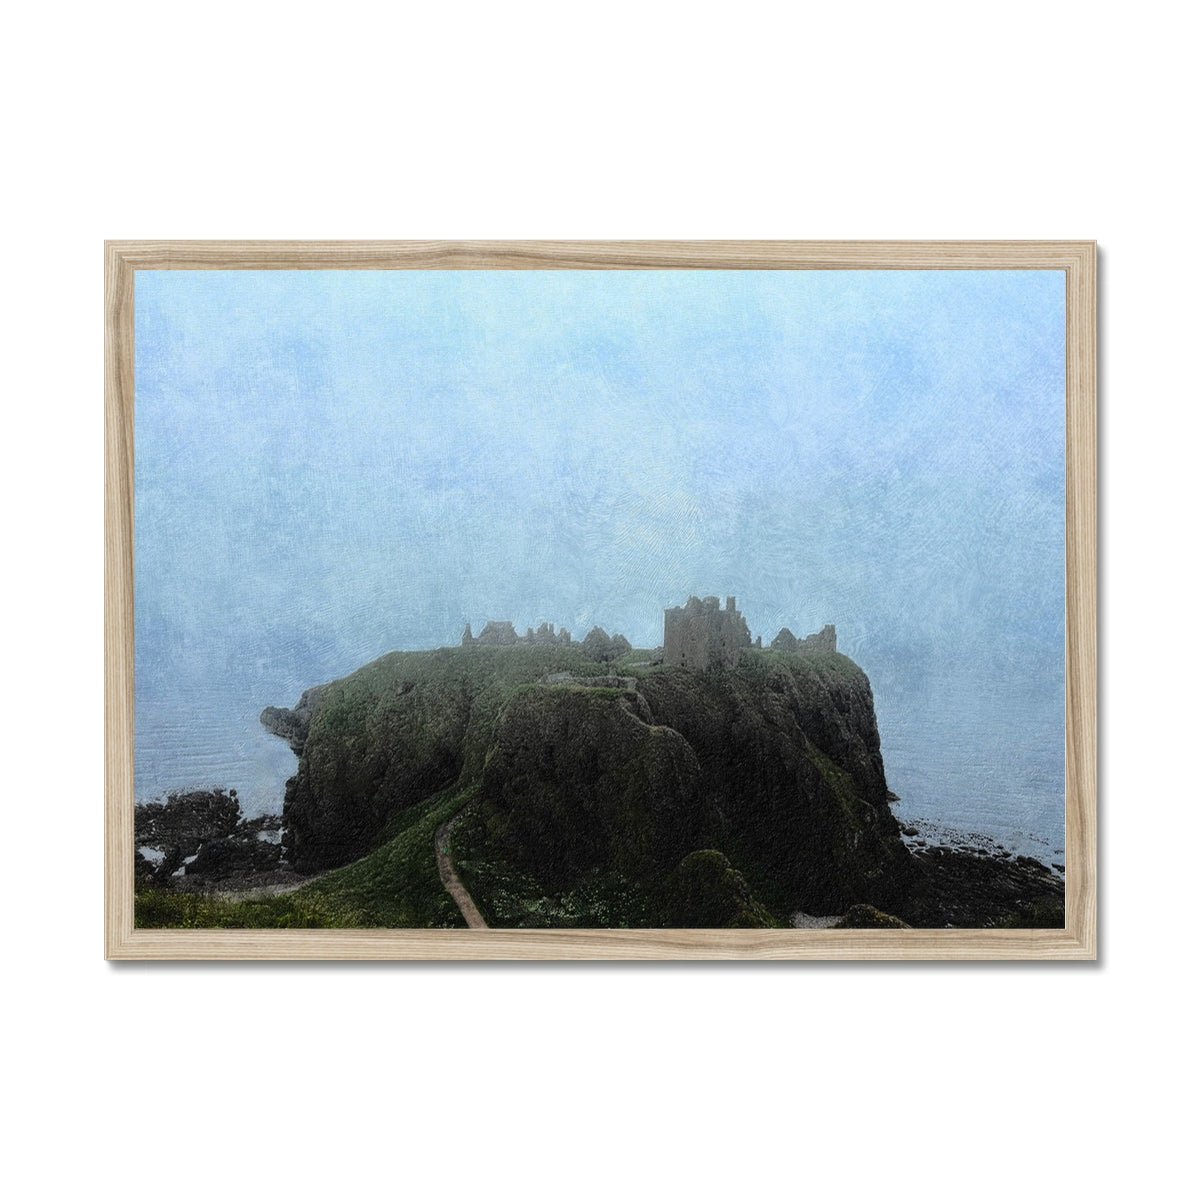 Dunnottar Castle Mist Painting | Framed Prints From Scotland-Framed Prints-Historic & Iconic Scotland Art Gallery-A2 Landscape-Natural Frame-Paintings, Prints, Homeware, Art Gifts From Scotland By Scottish Artist Kevin Hunter